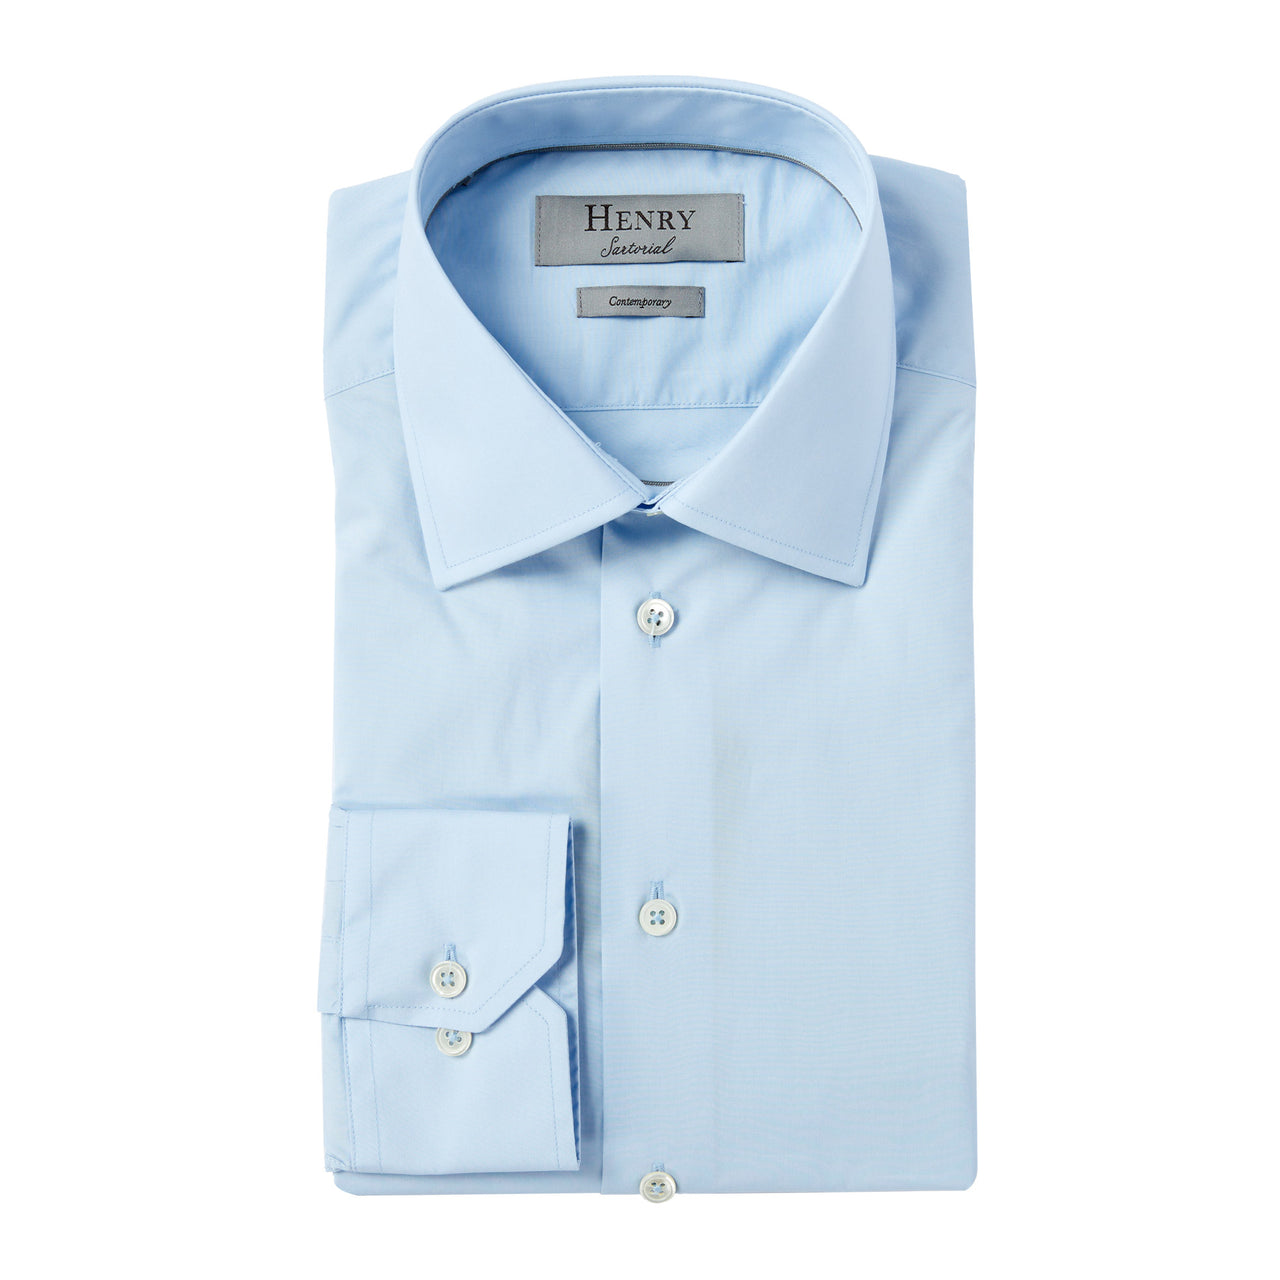 HENRY SARTORIAL Plain Shirt POWDER BLUE